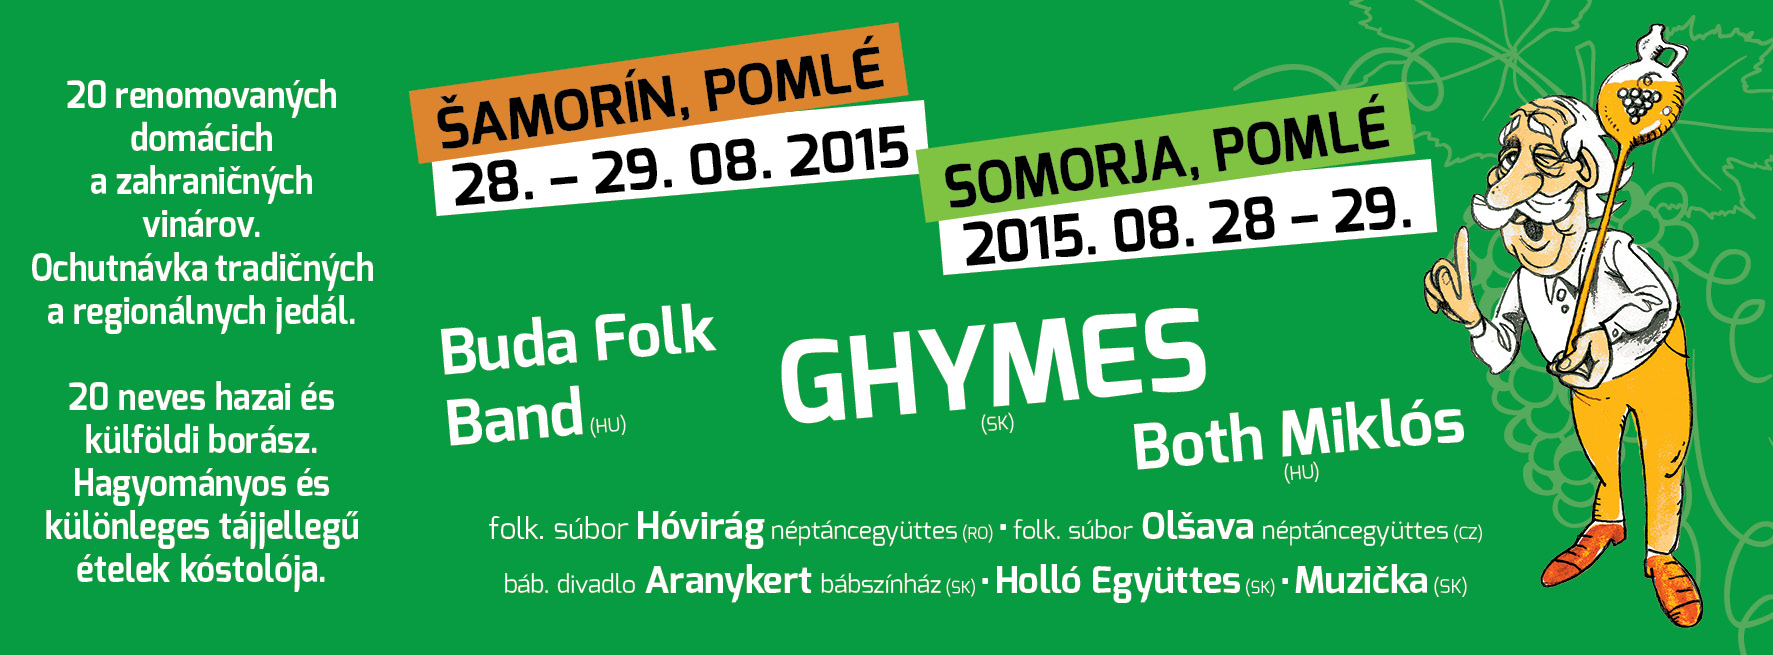 Festival Poml amorn 2015  chute, vna, tradcie - 6.ronk